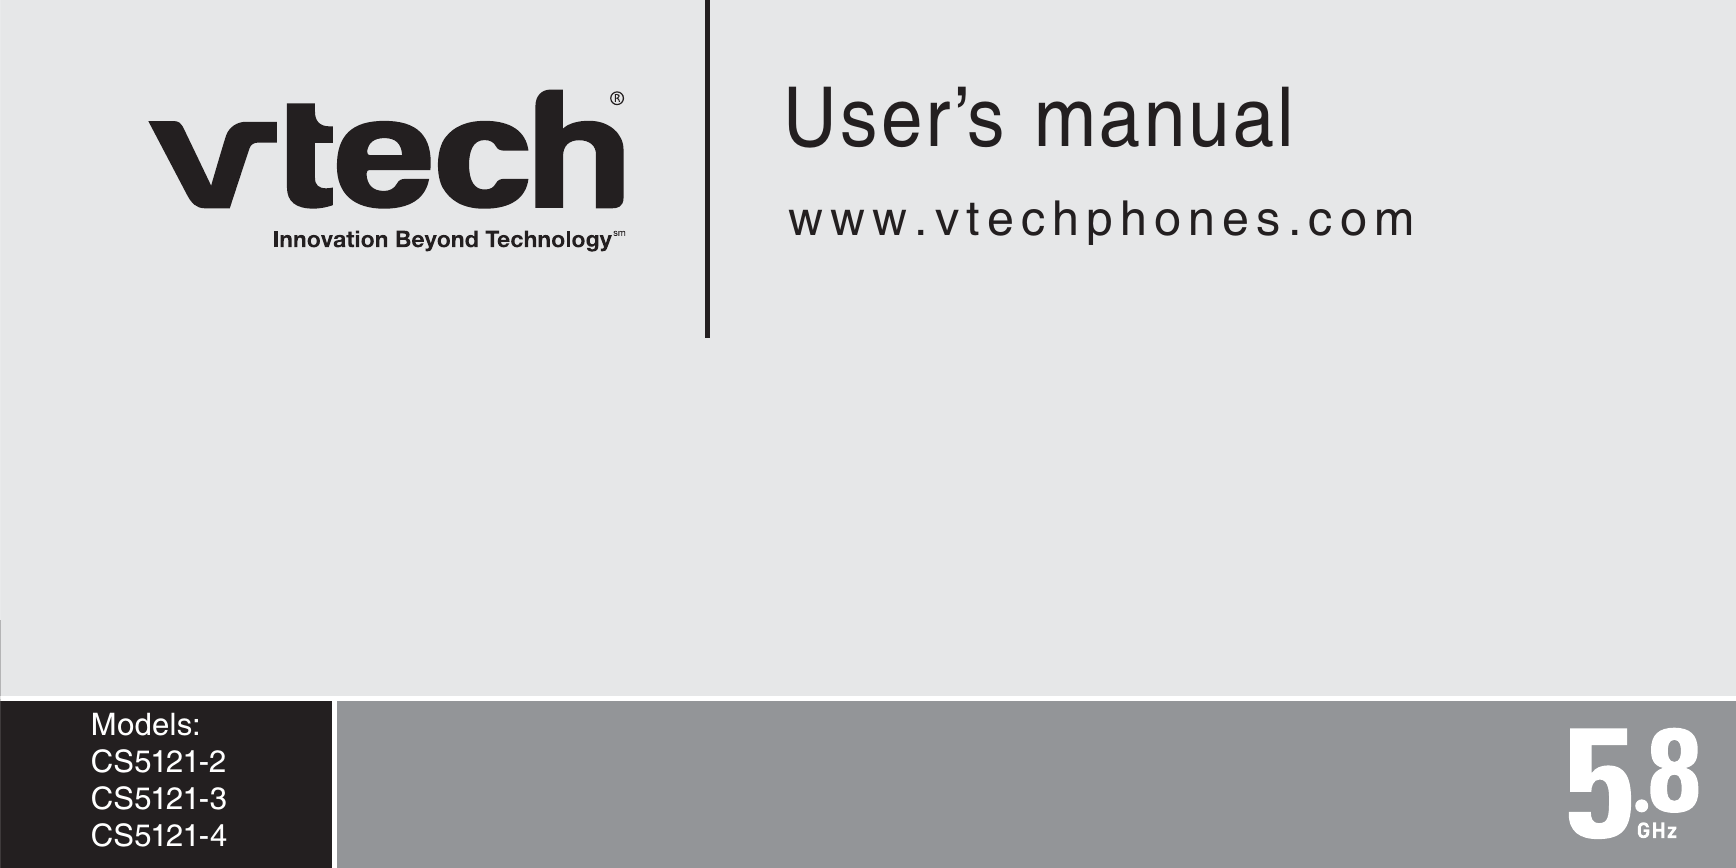 User’s manualwww.vtechphones.comModels: CS5121-2CS5121-3CS5121-4